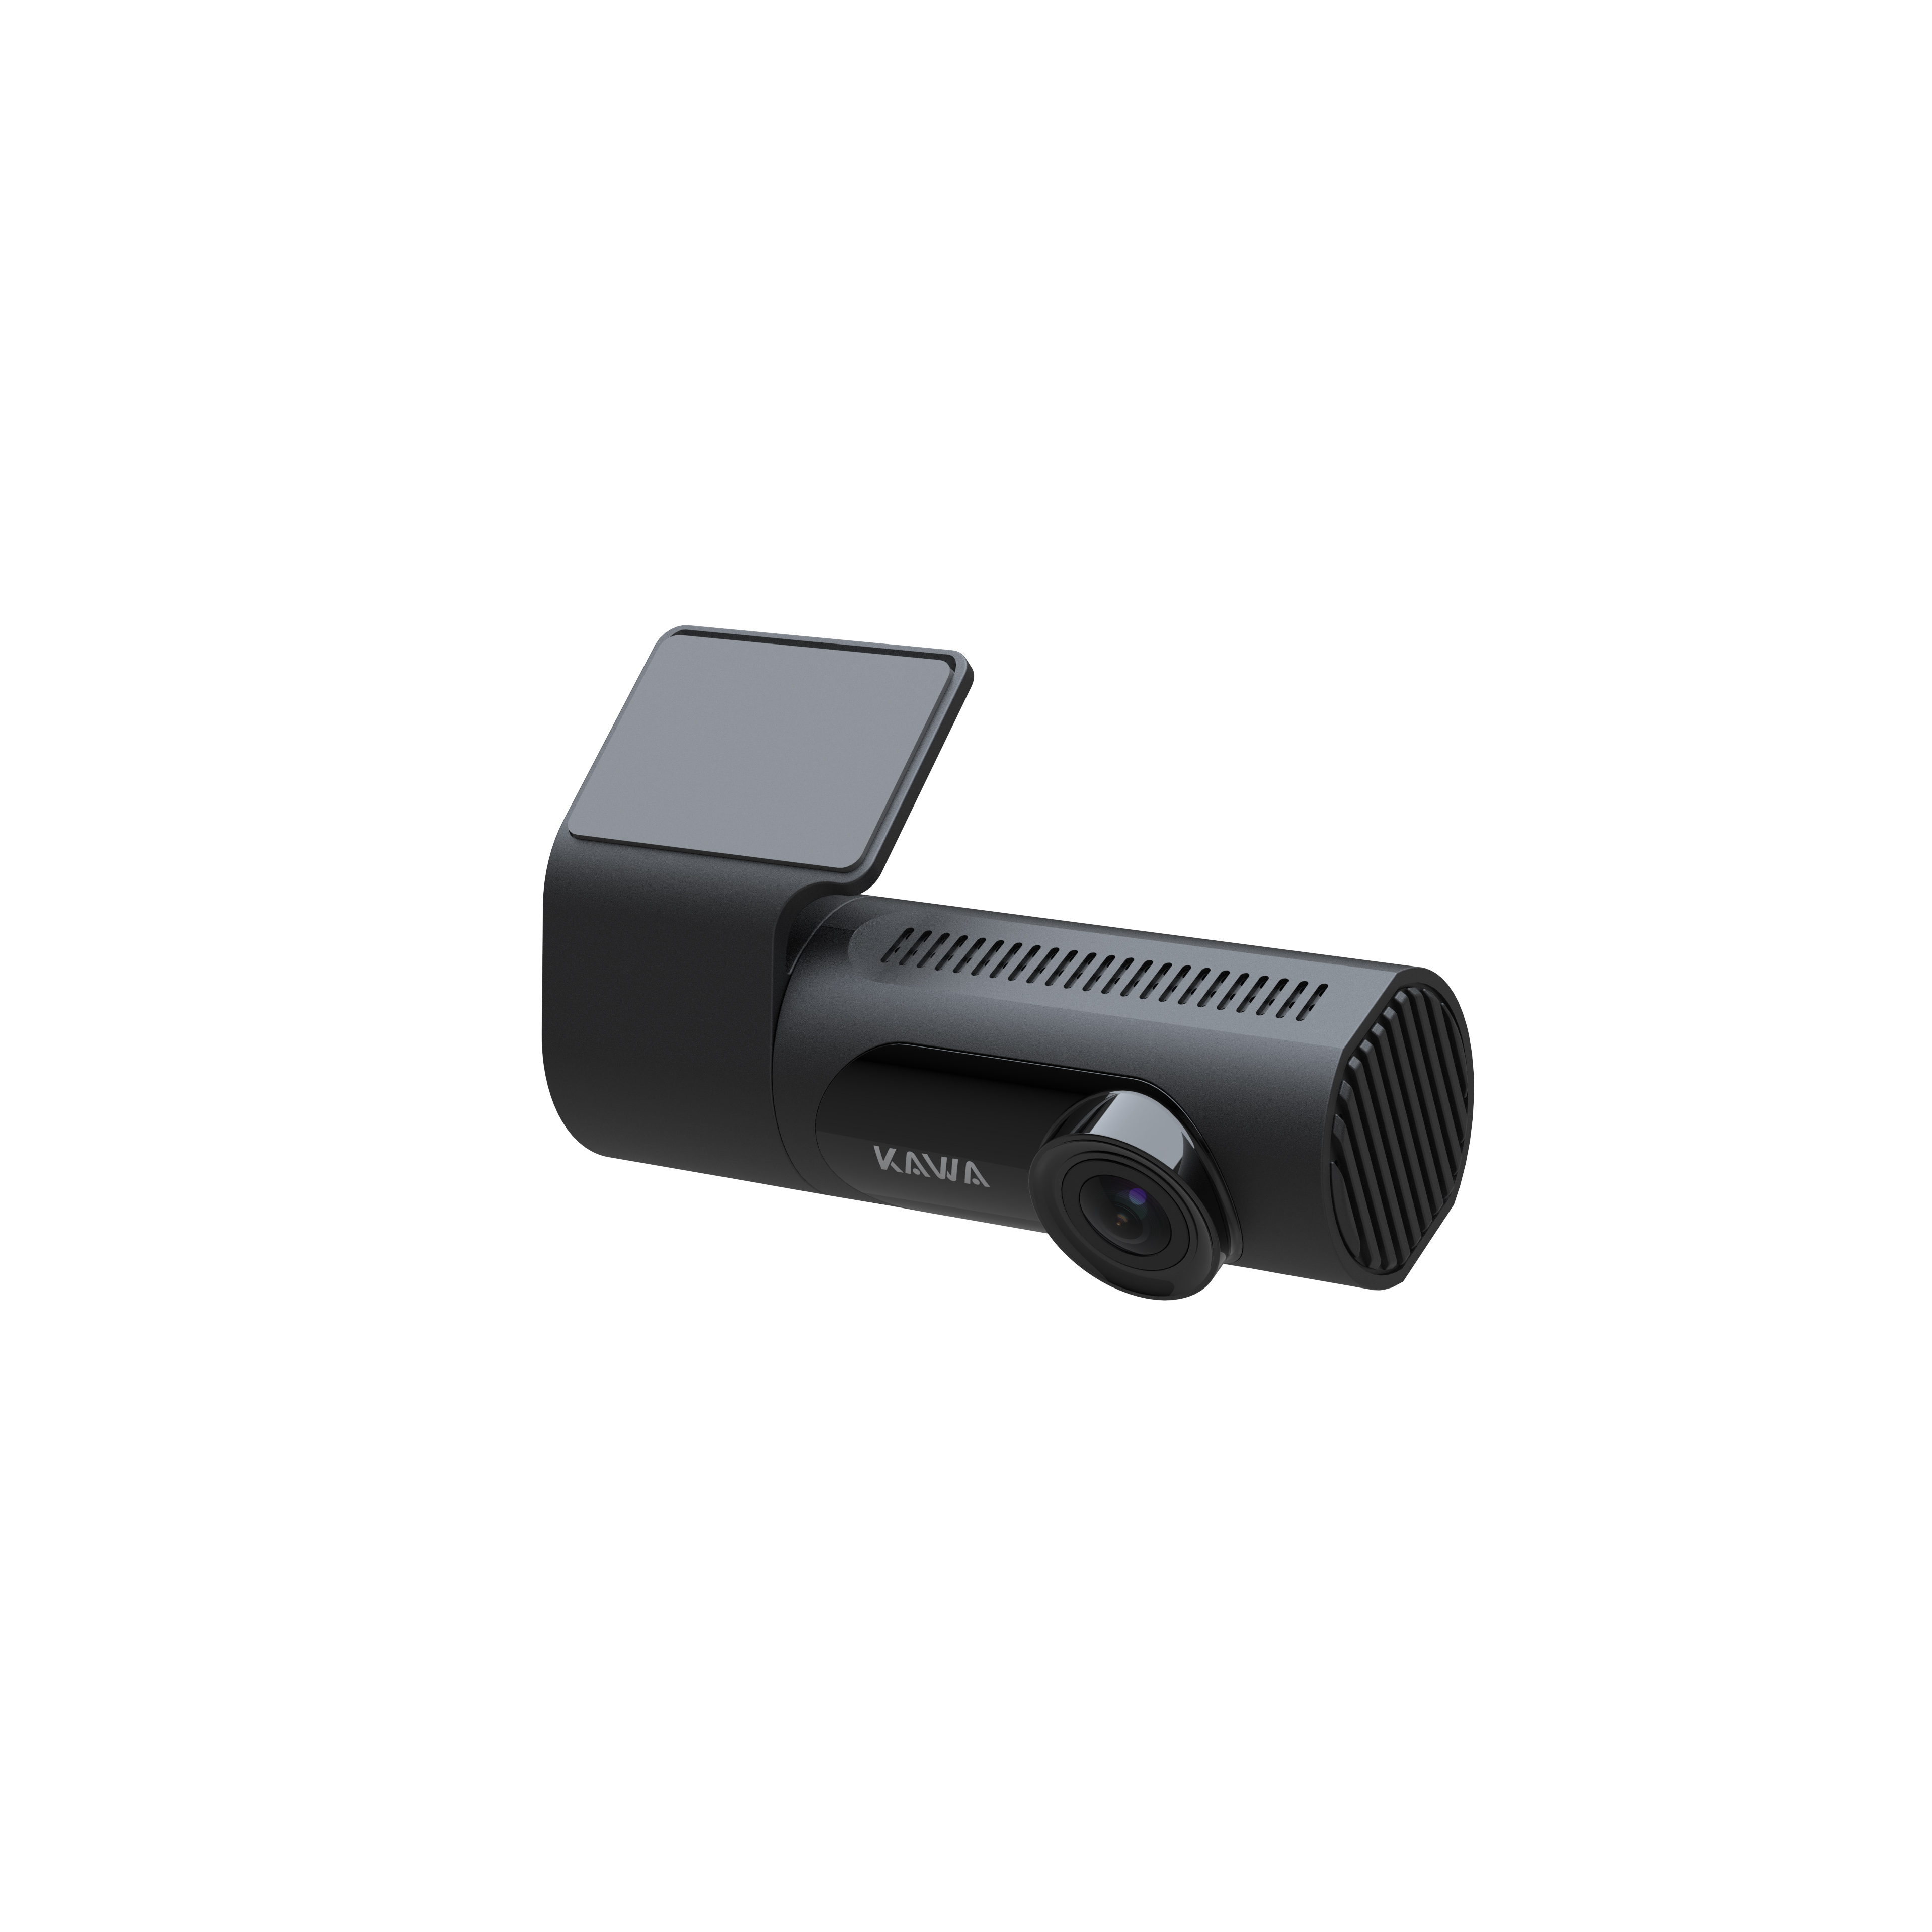 Kawa 2k 1440p Hd Wifi Dash Cam For Car Dvr Camera Video Recorder